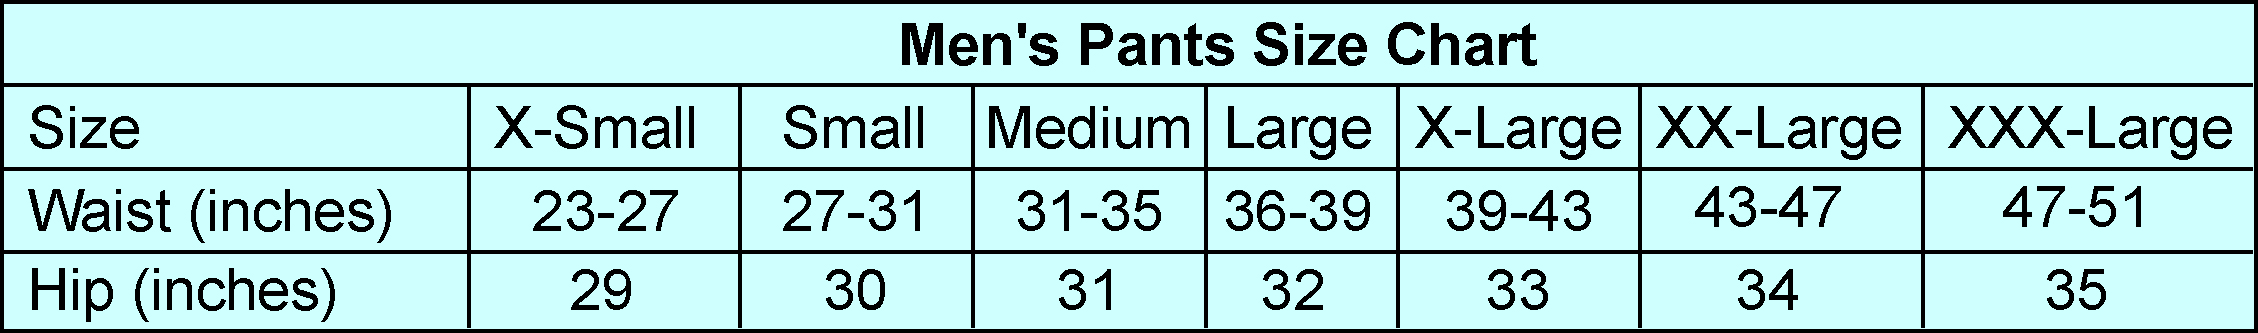 large pants size